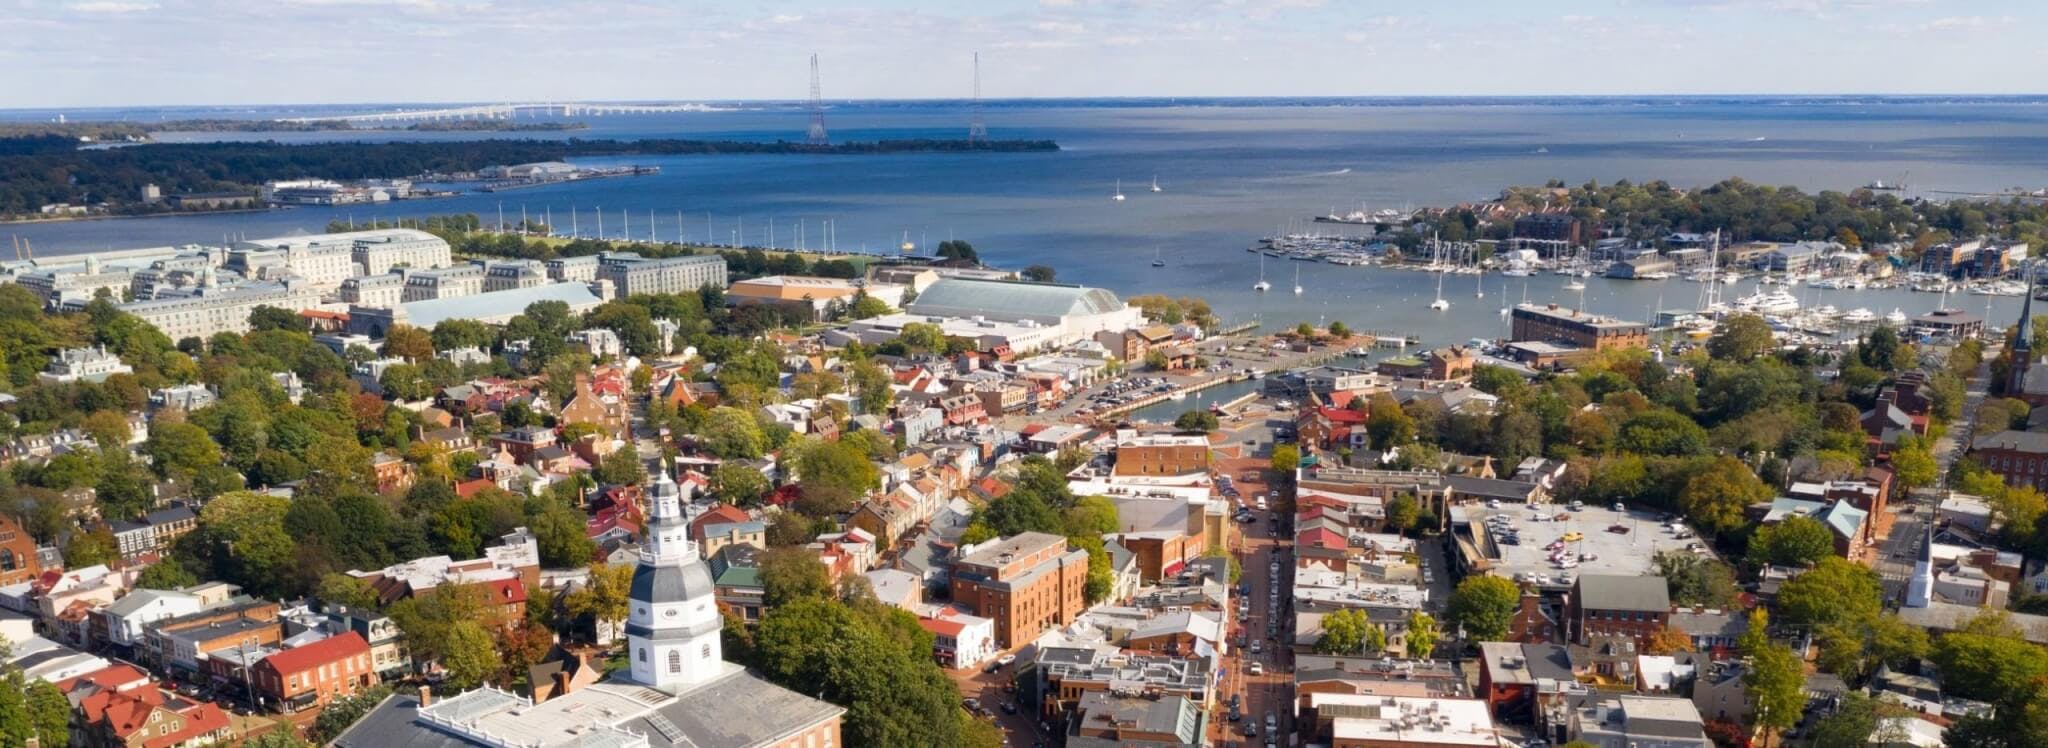 Annapolis, Maryland skyline